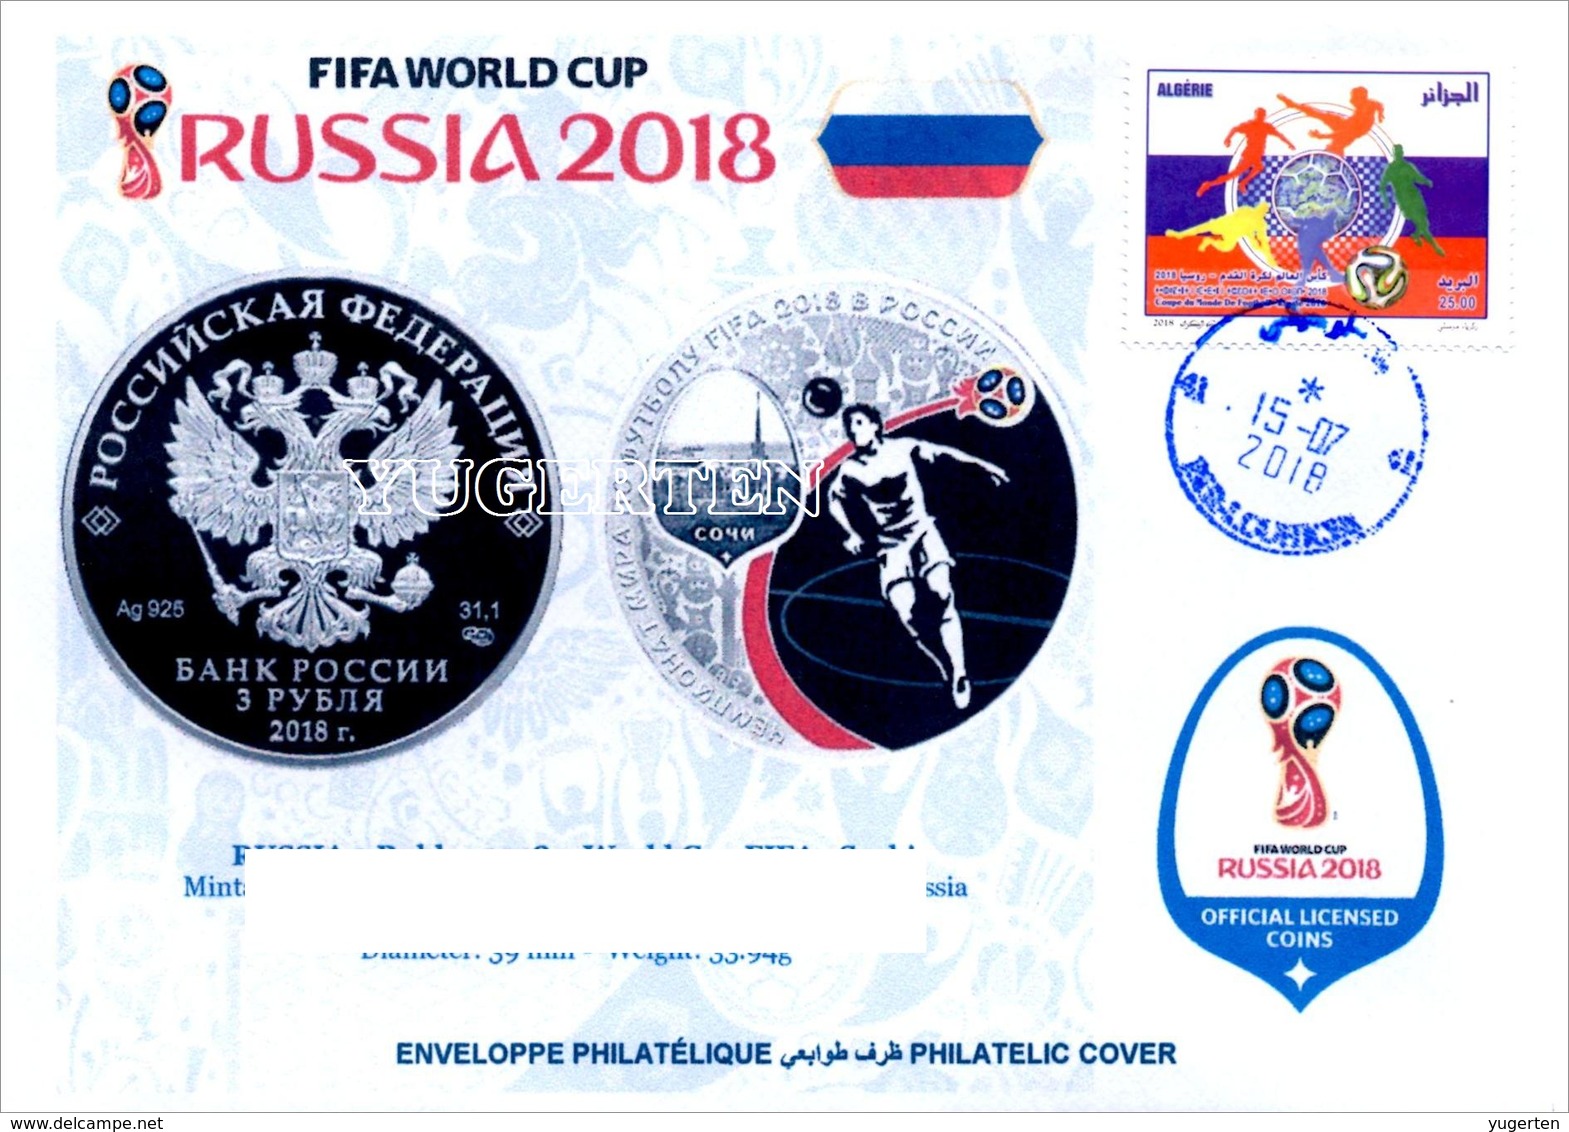 ARGHELIA - Philatelic Cover Coins Banknotes Currencies Money FIFA Football World Cup Russia 2018 Geld Münzen Banknoten - 2018 – Rusia